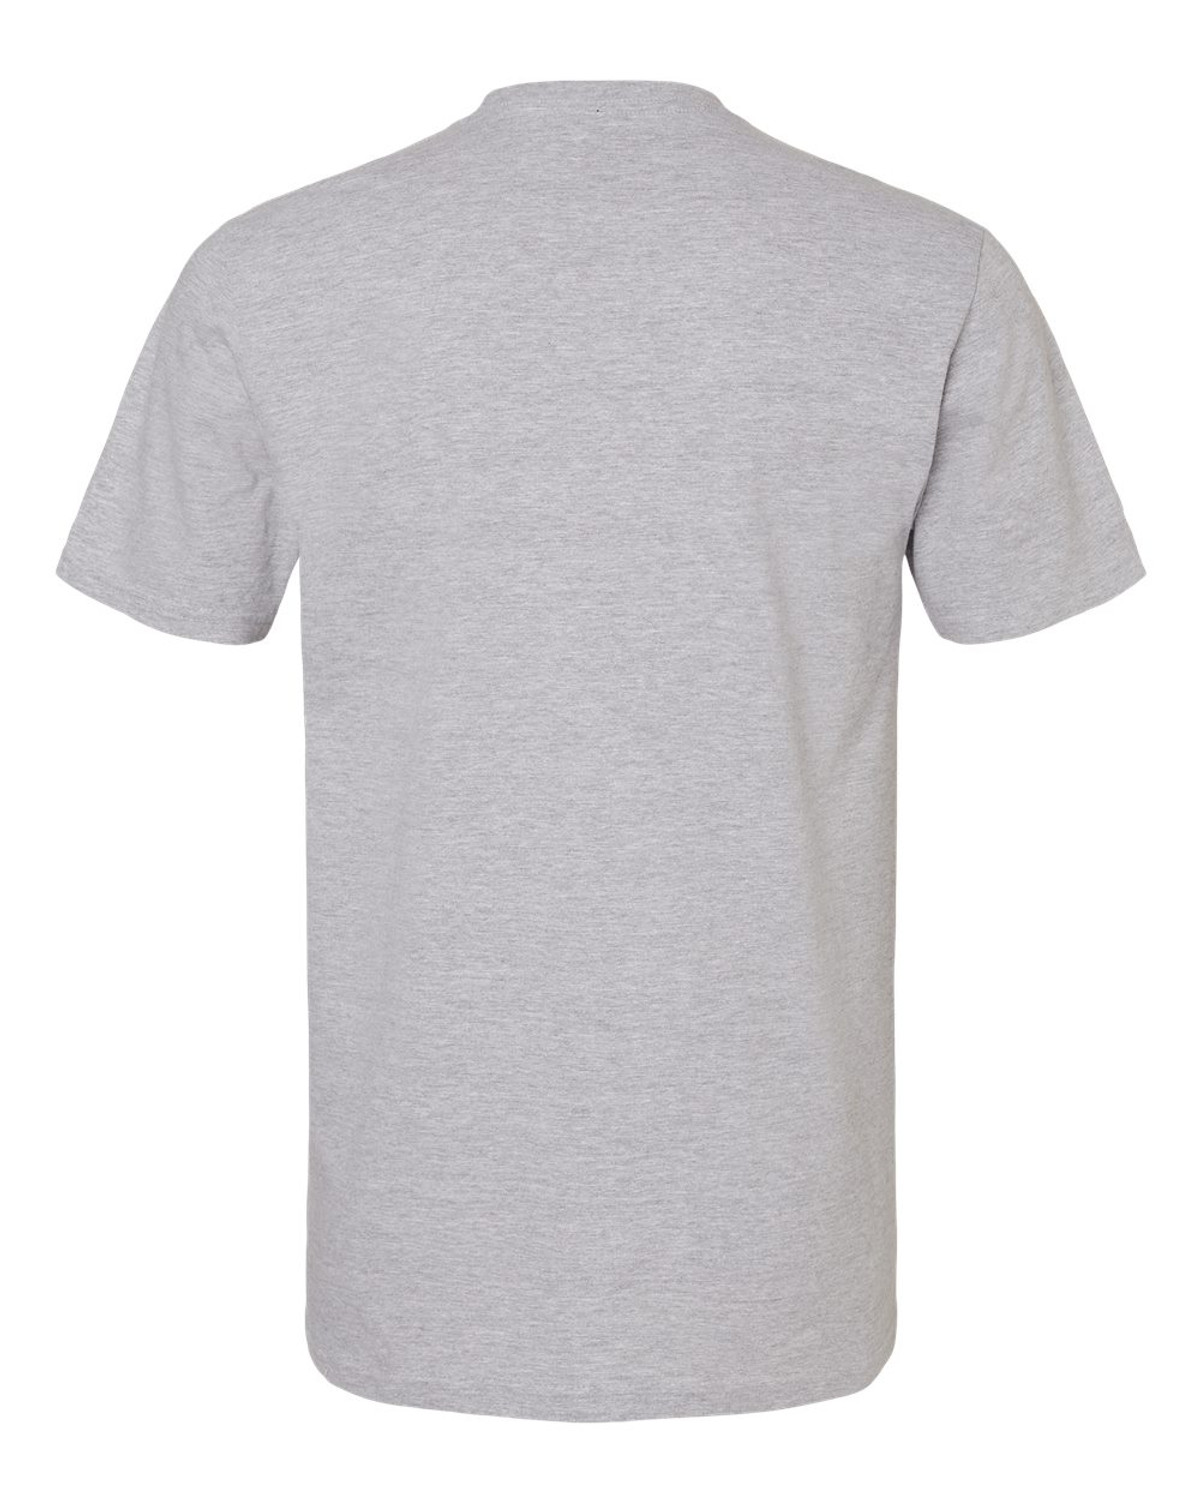 Midweight Cotton Unisex T-Shirt